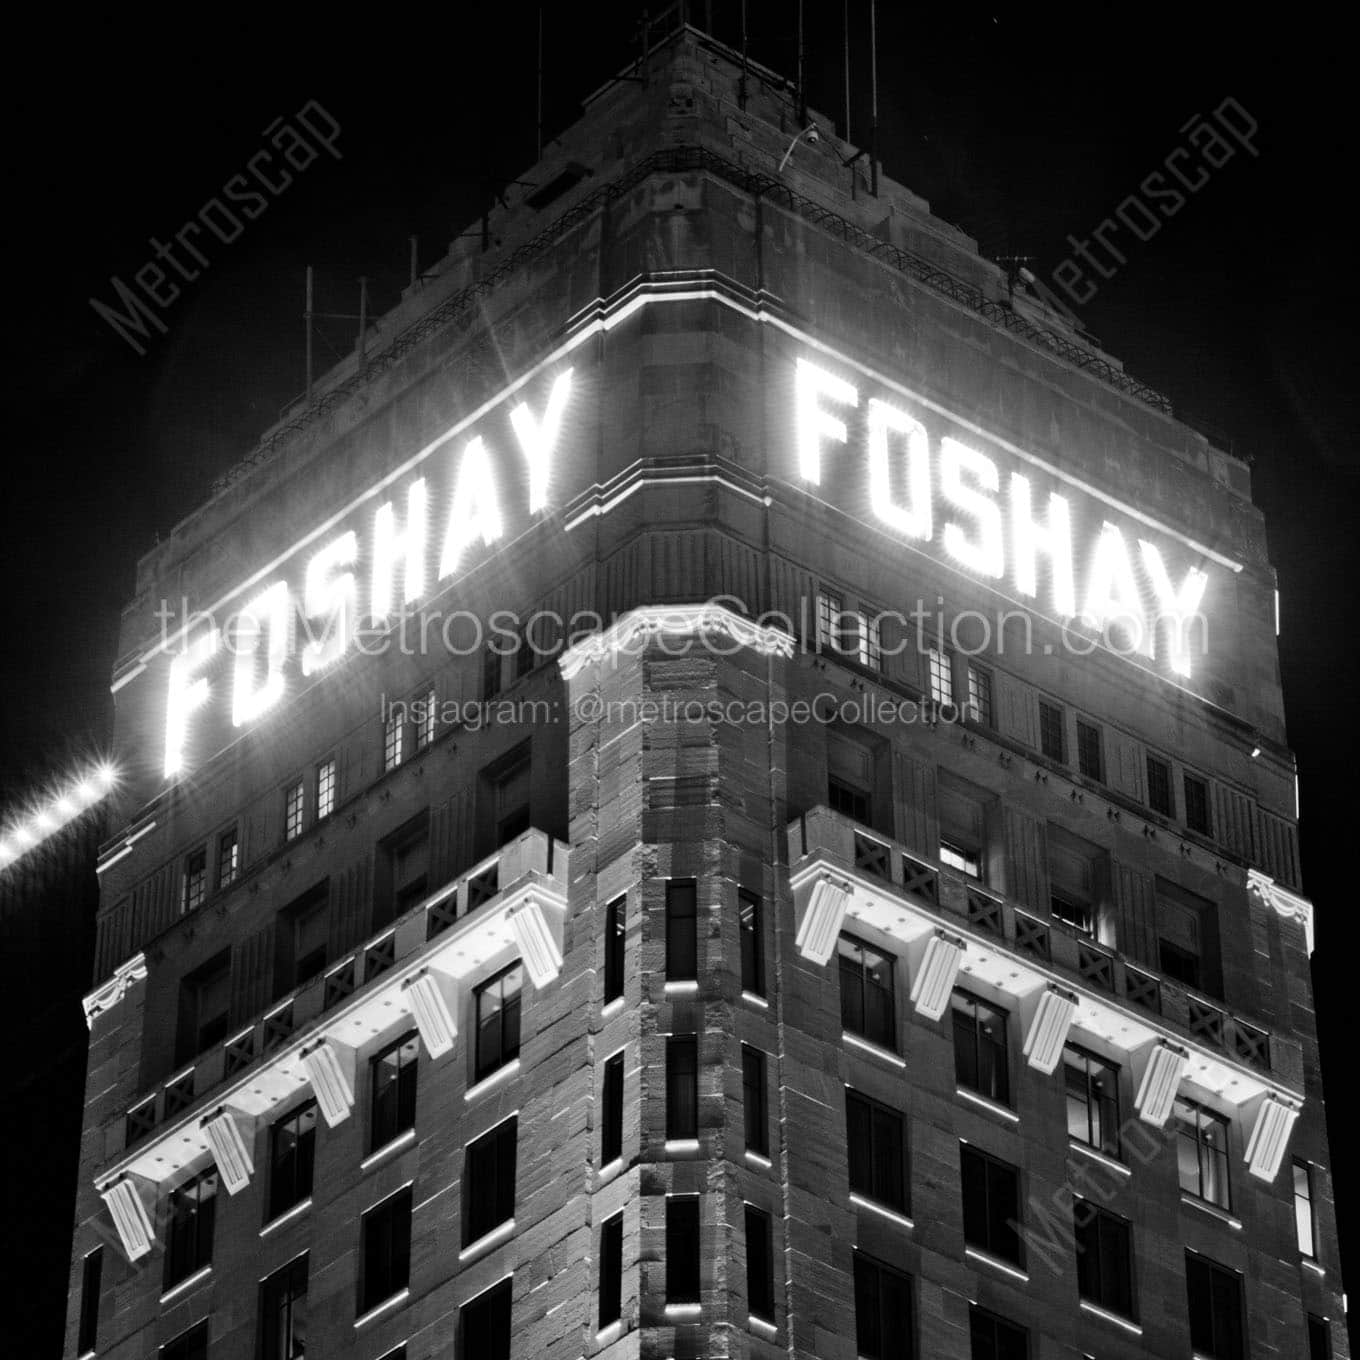 foshay tower at night Black & White Office Art